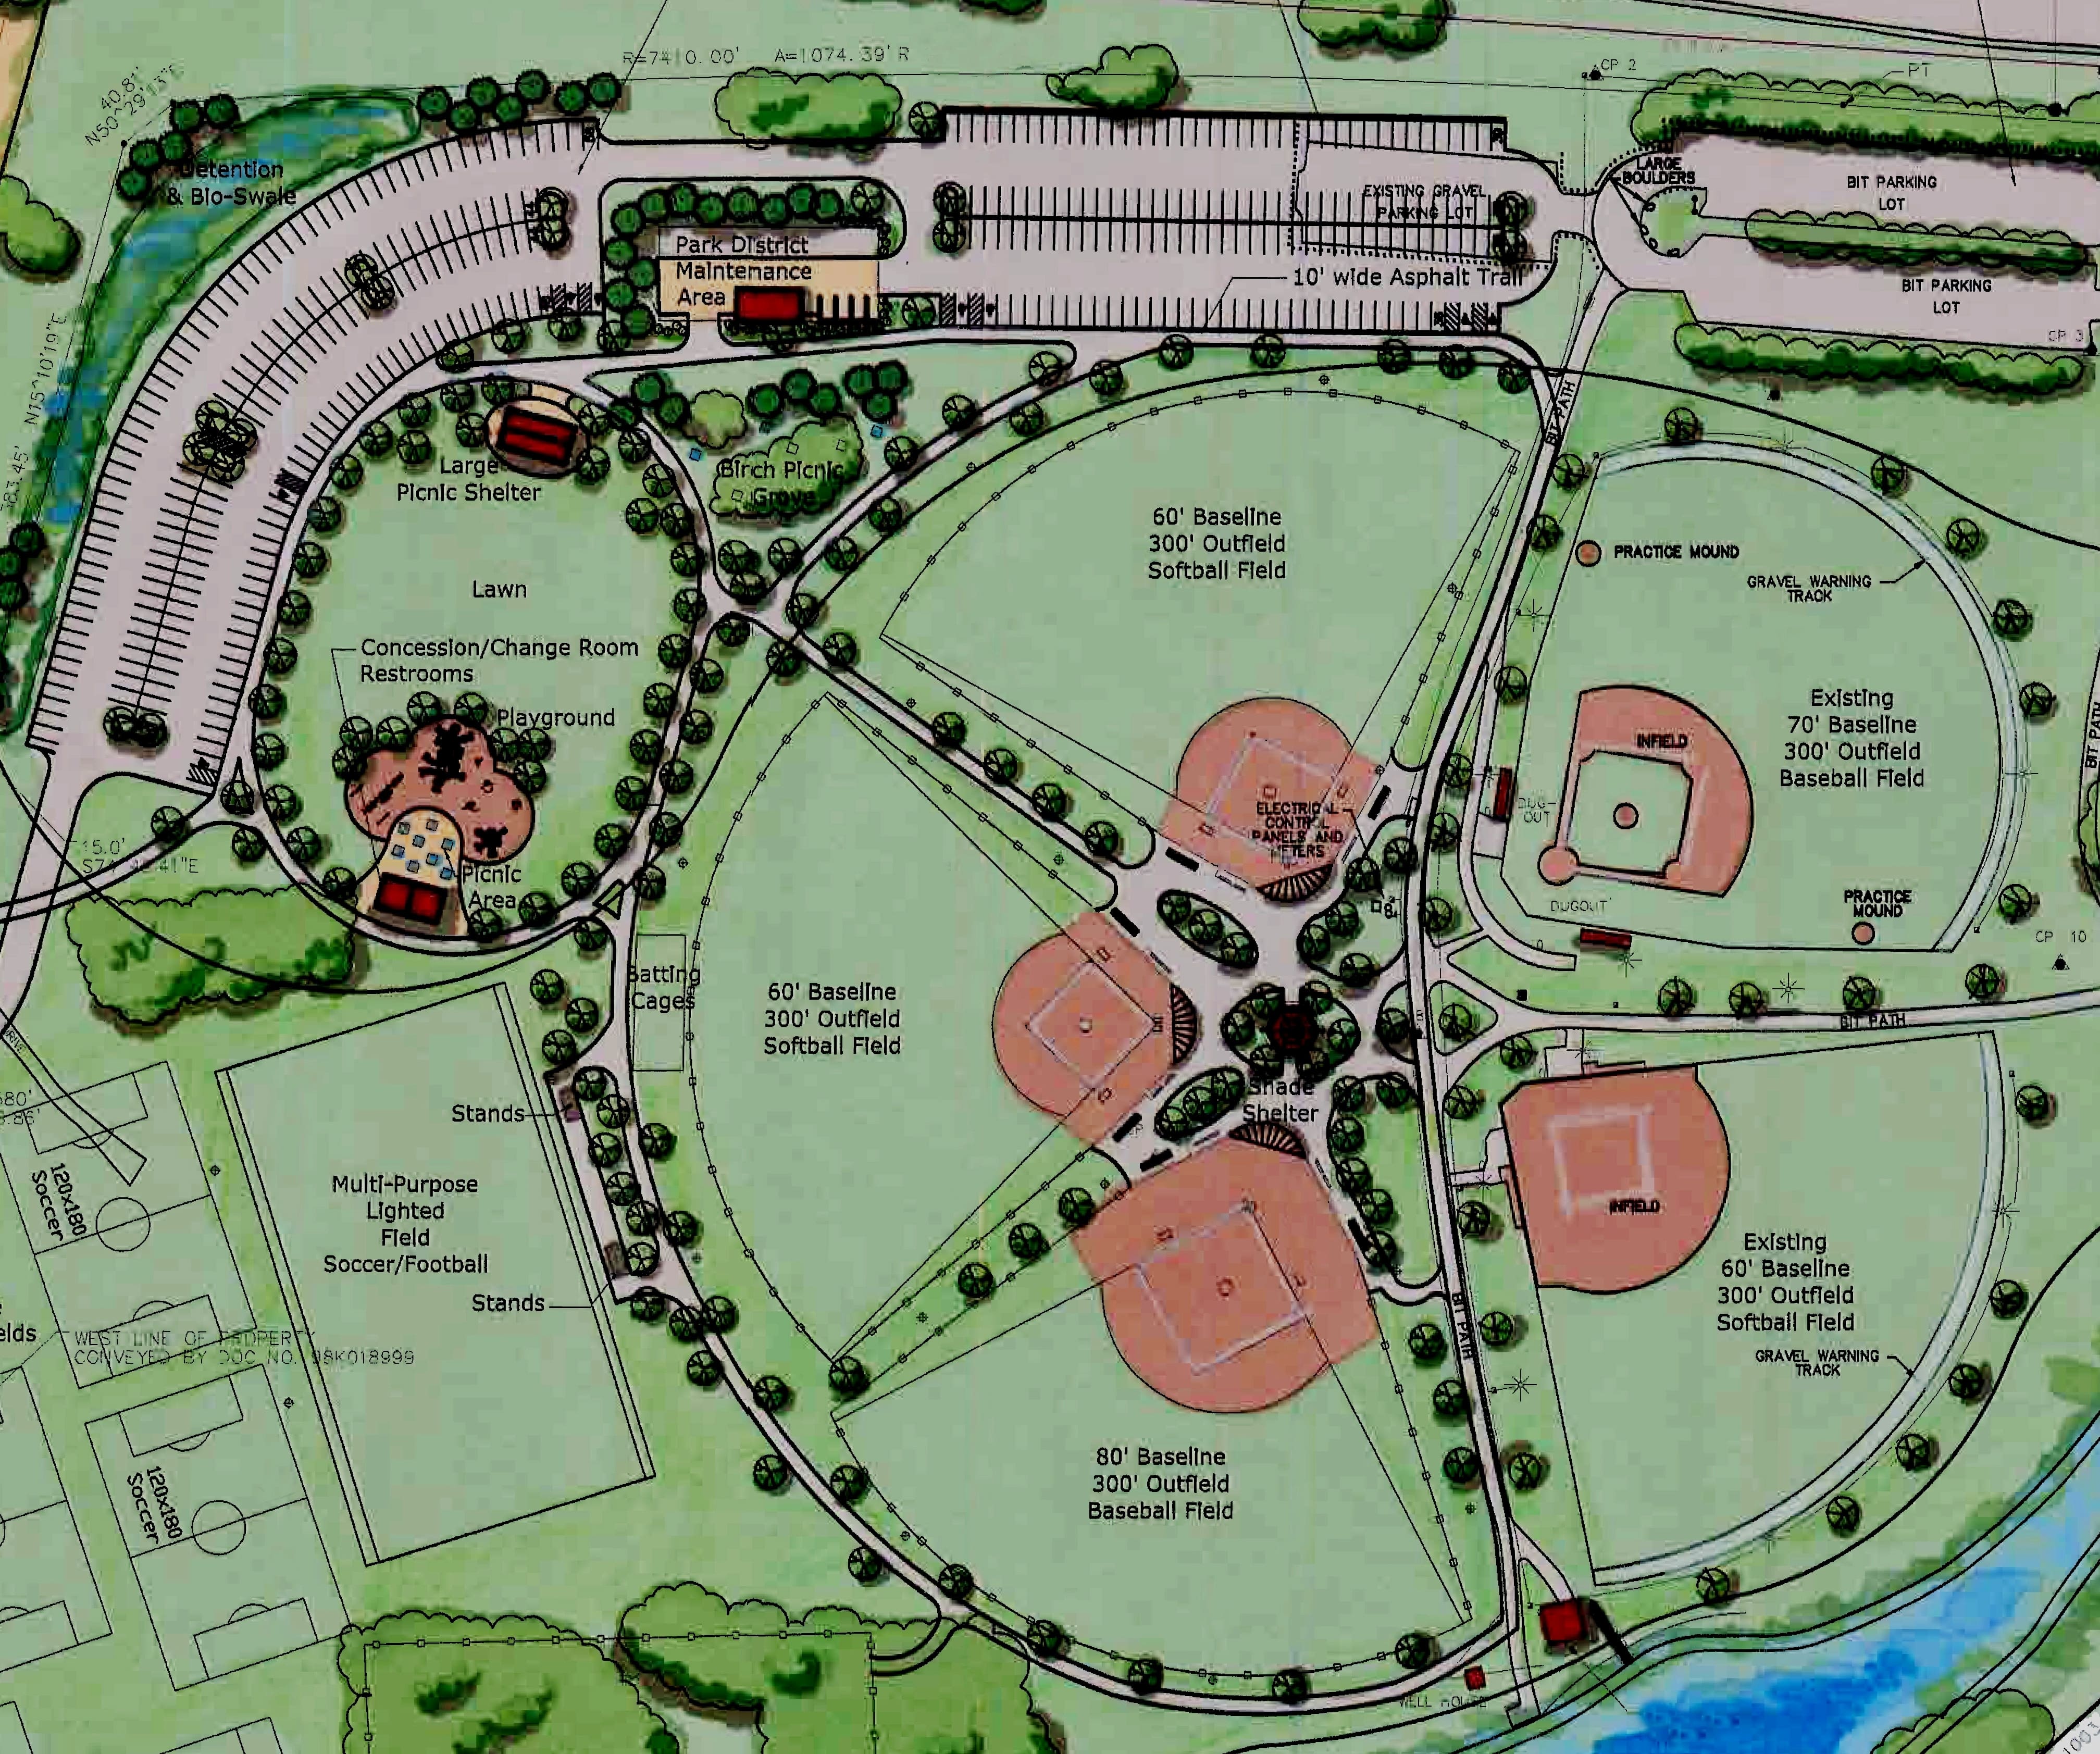 Sports Complex Plan Zoom In - West Main Park Master Plan - Upland Design